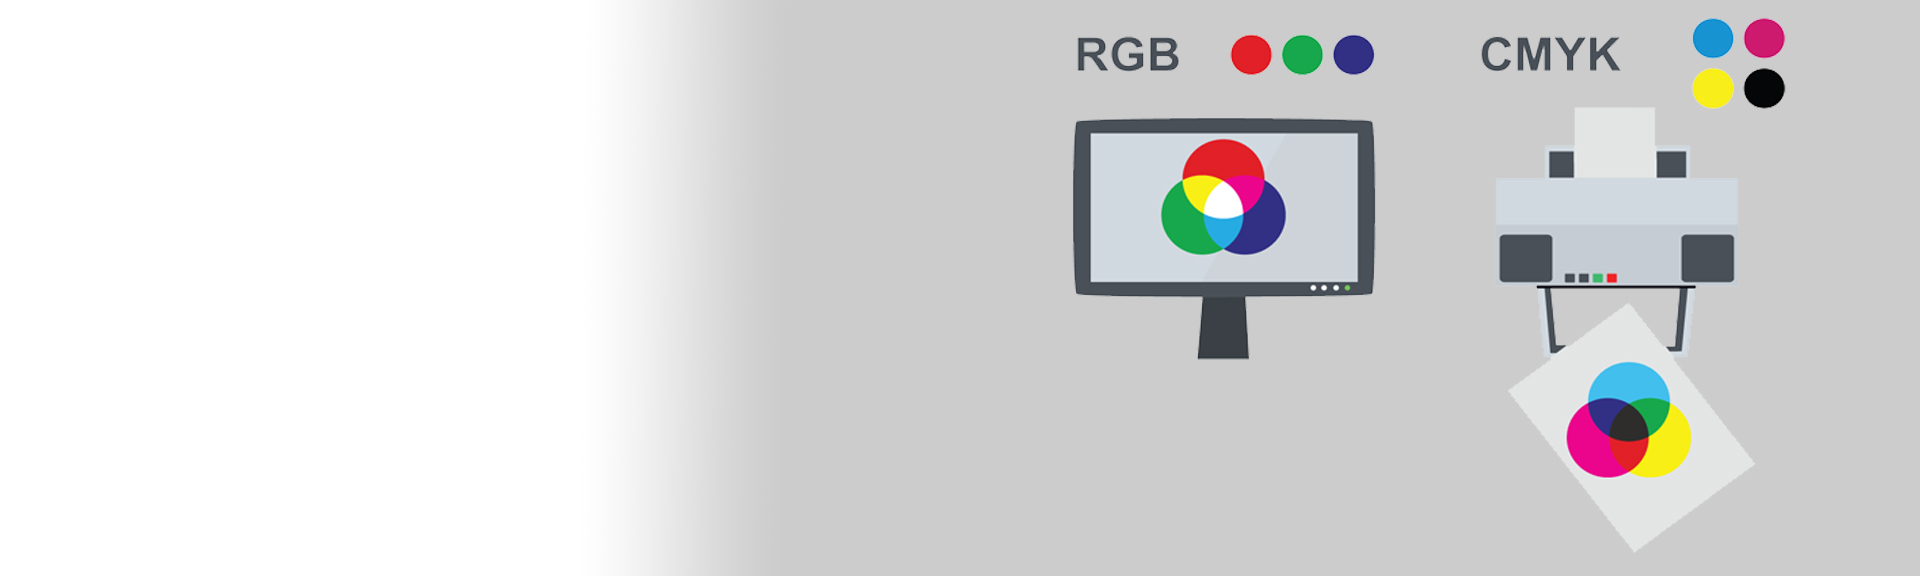 Color measurement using RGB digital color sensors and photodiodes